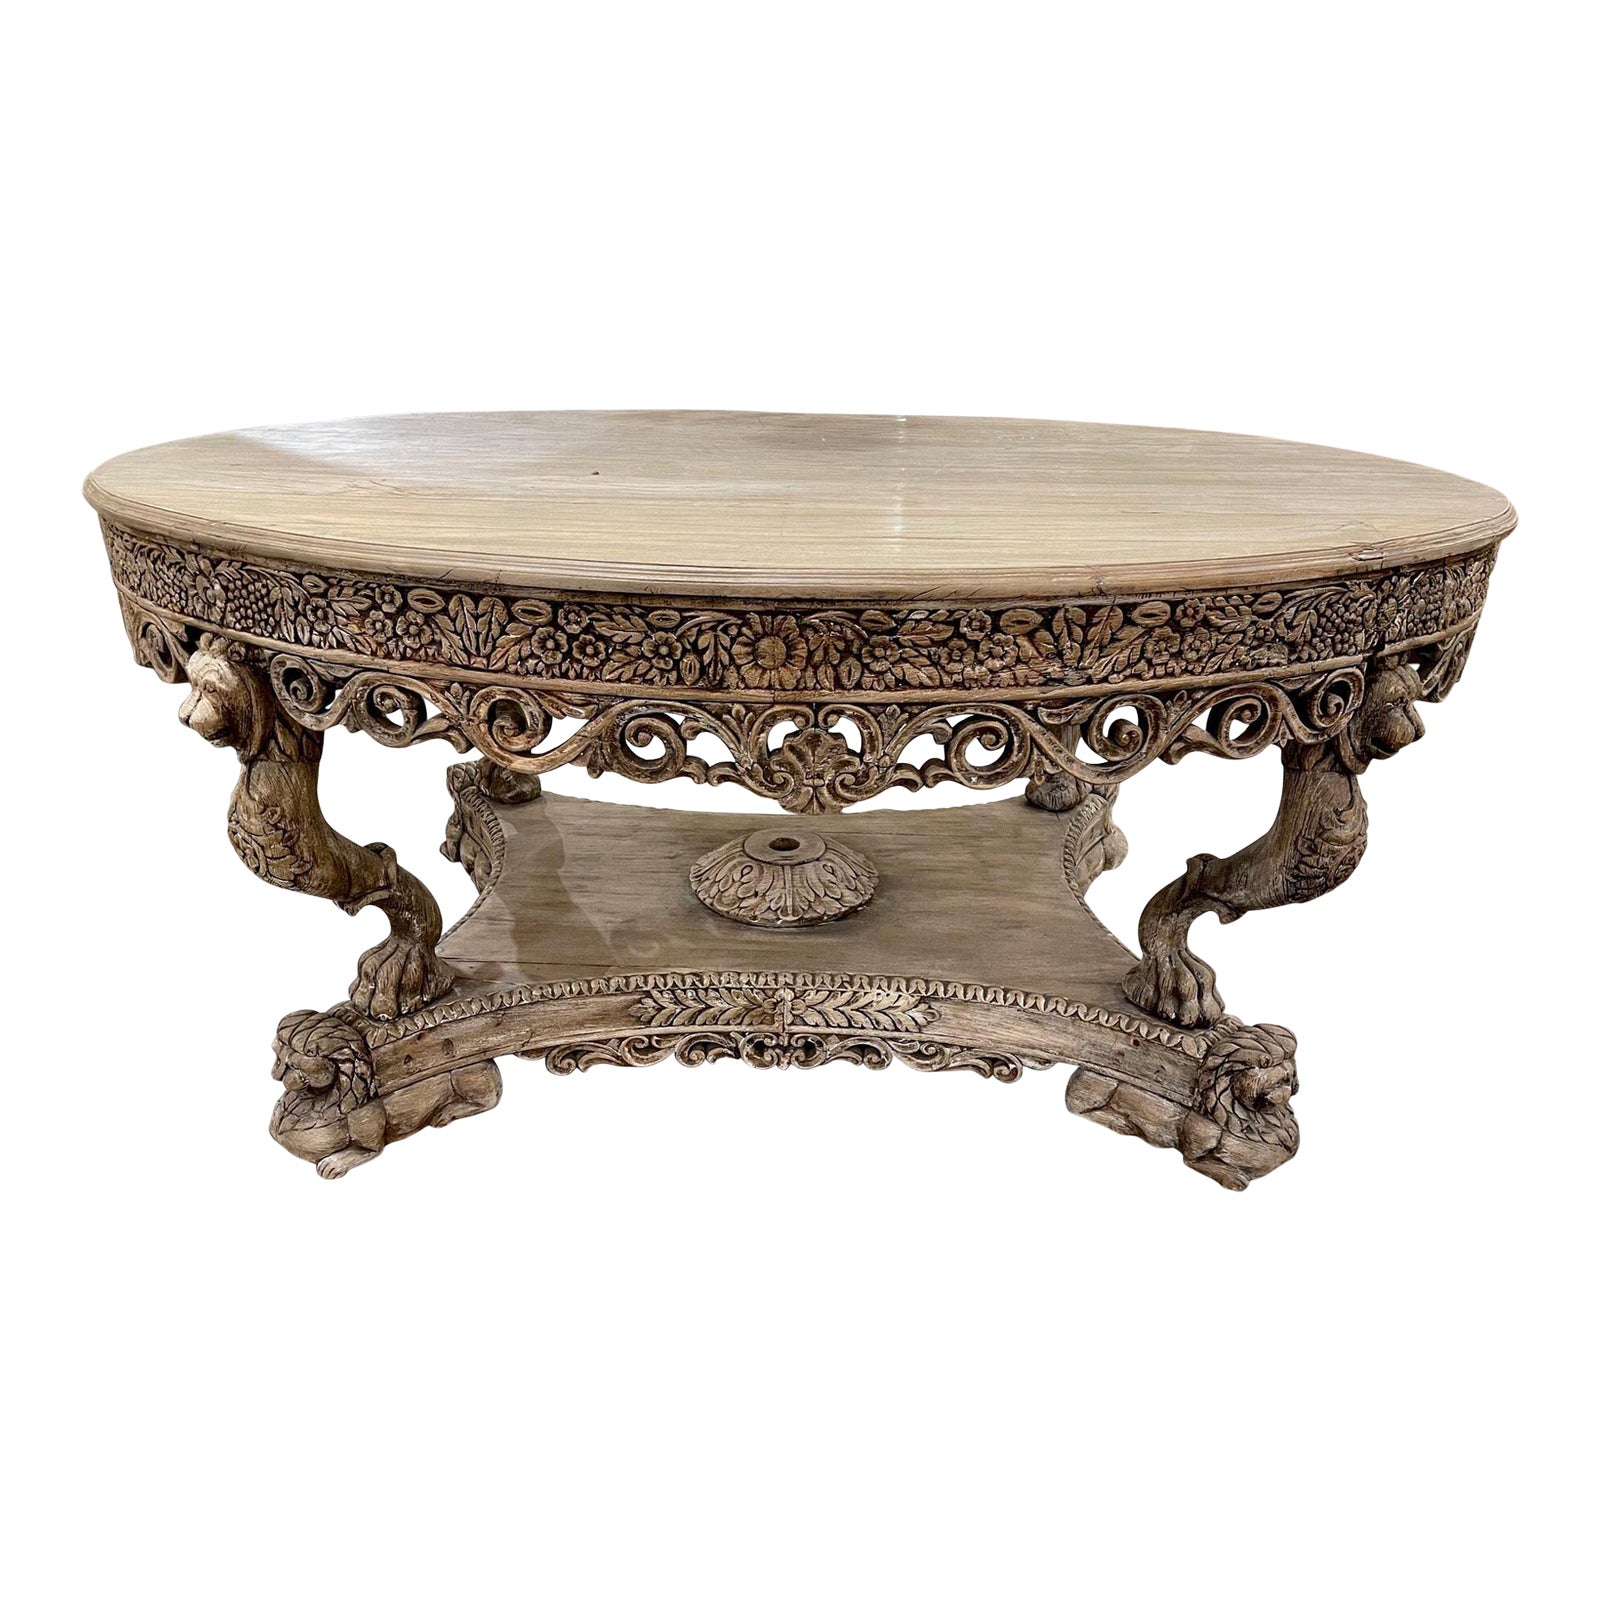 antique-italian-carved-oak-oval-foyer-table-8365.jpg